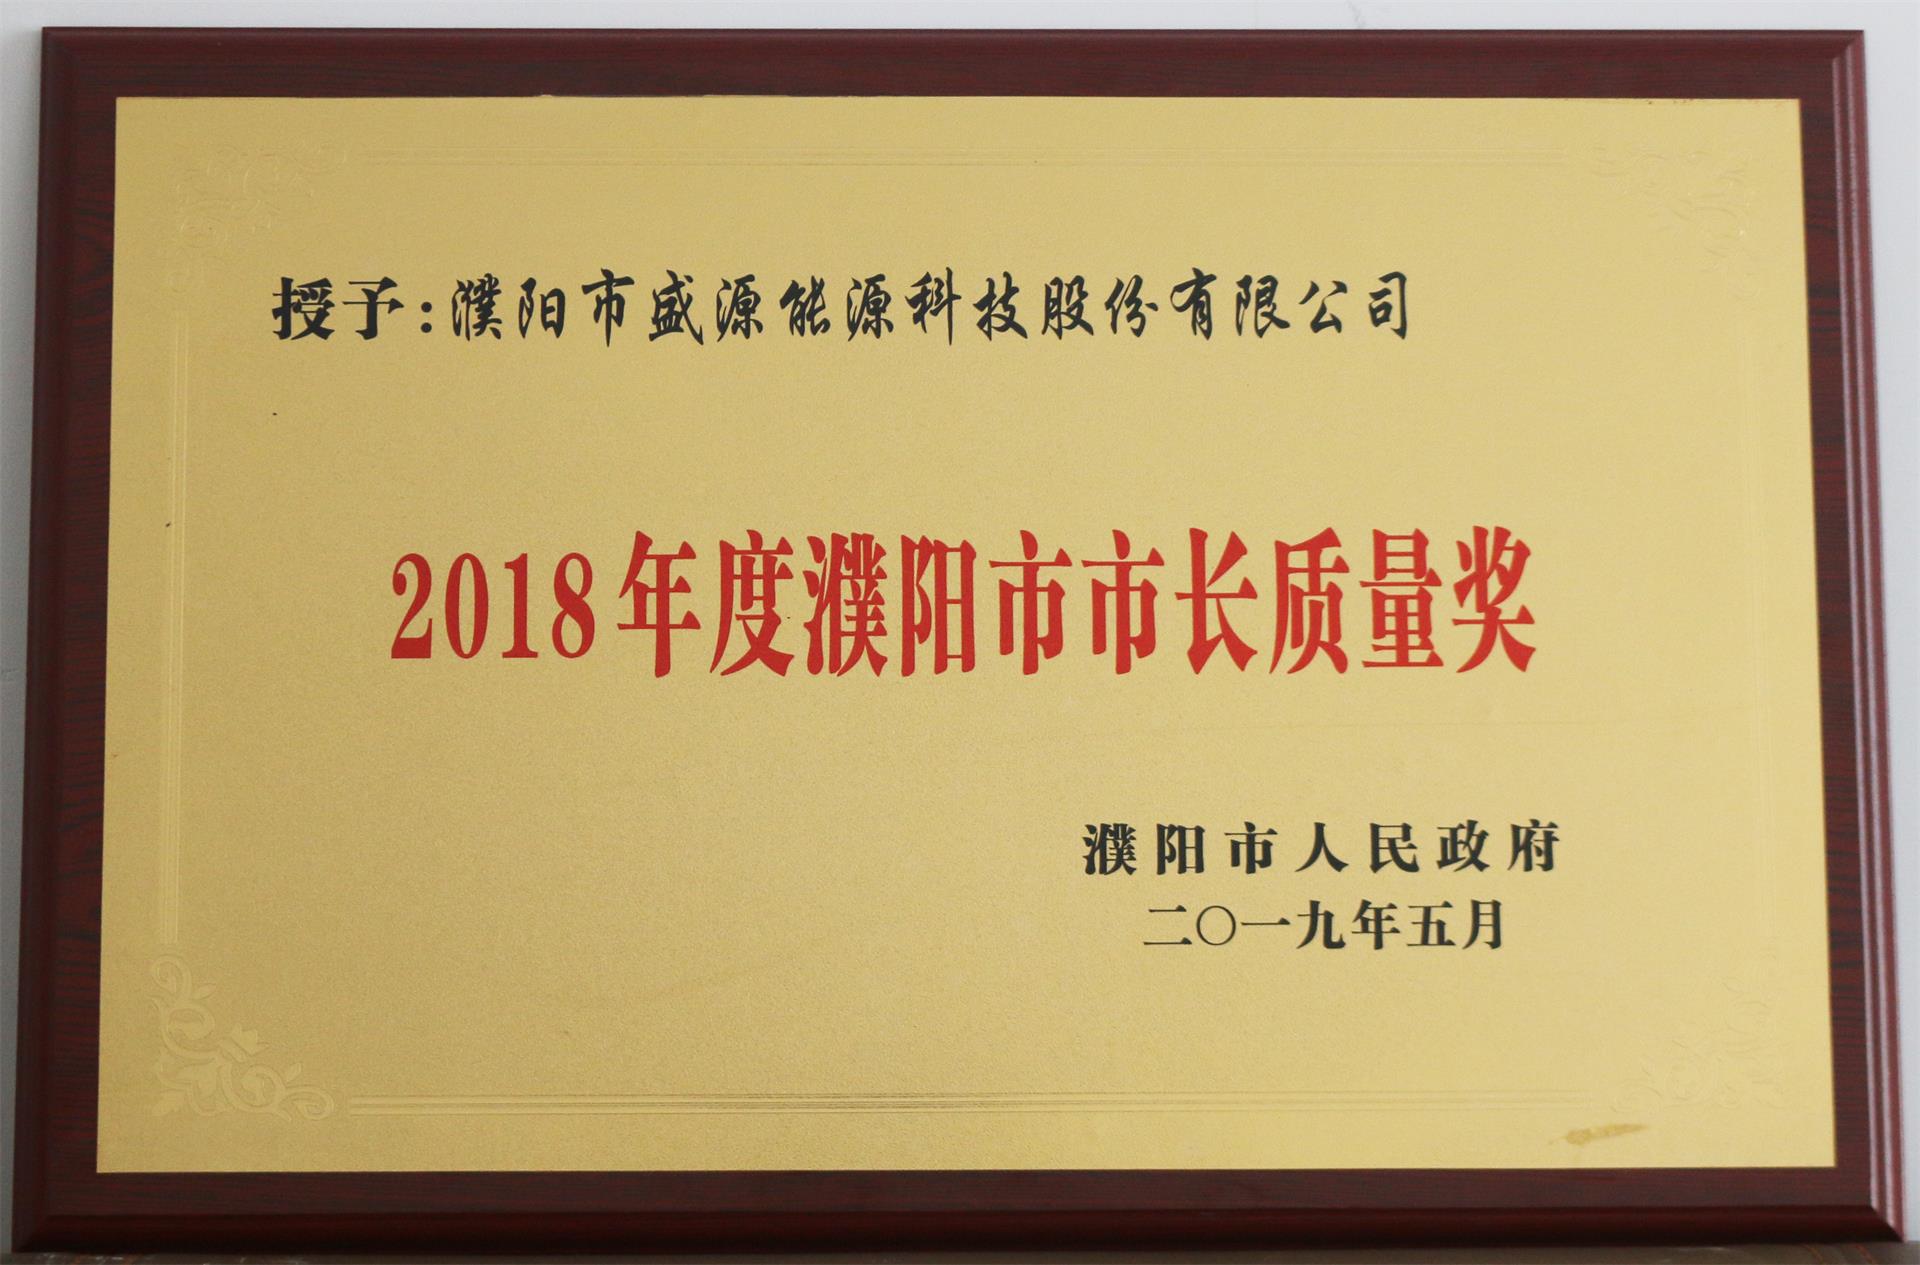 13.2019年5月，盛源科技榮獲“2018年度濮陽市市長質量獎”榮譽稱號.JPG